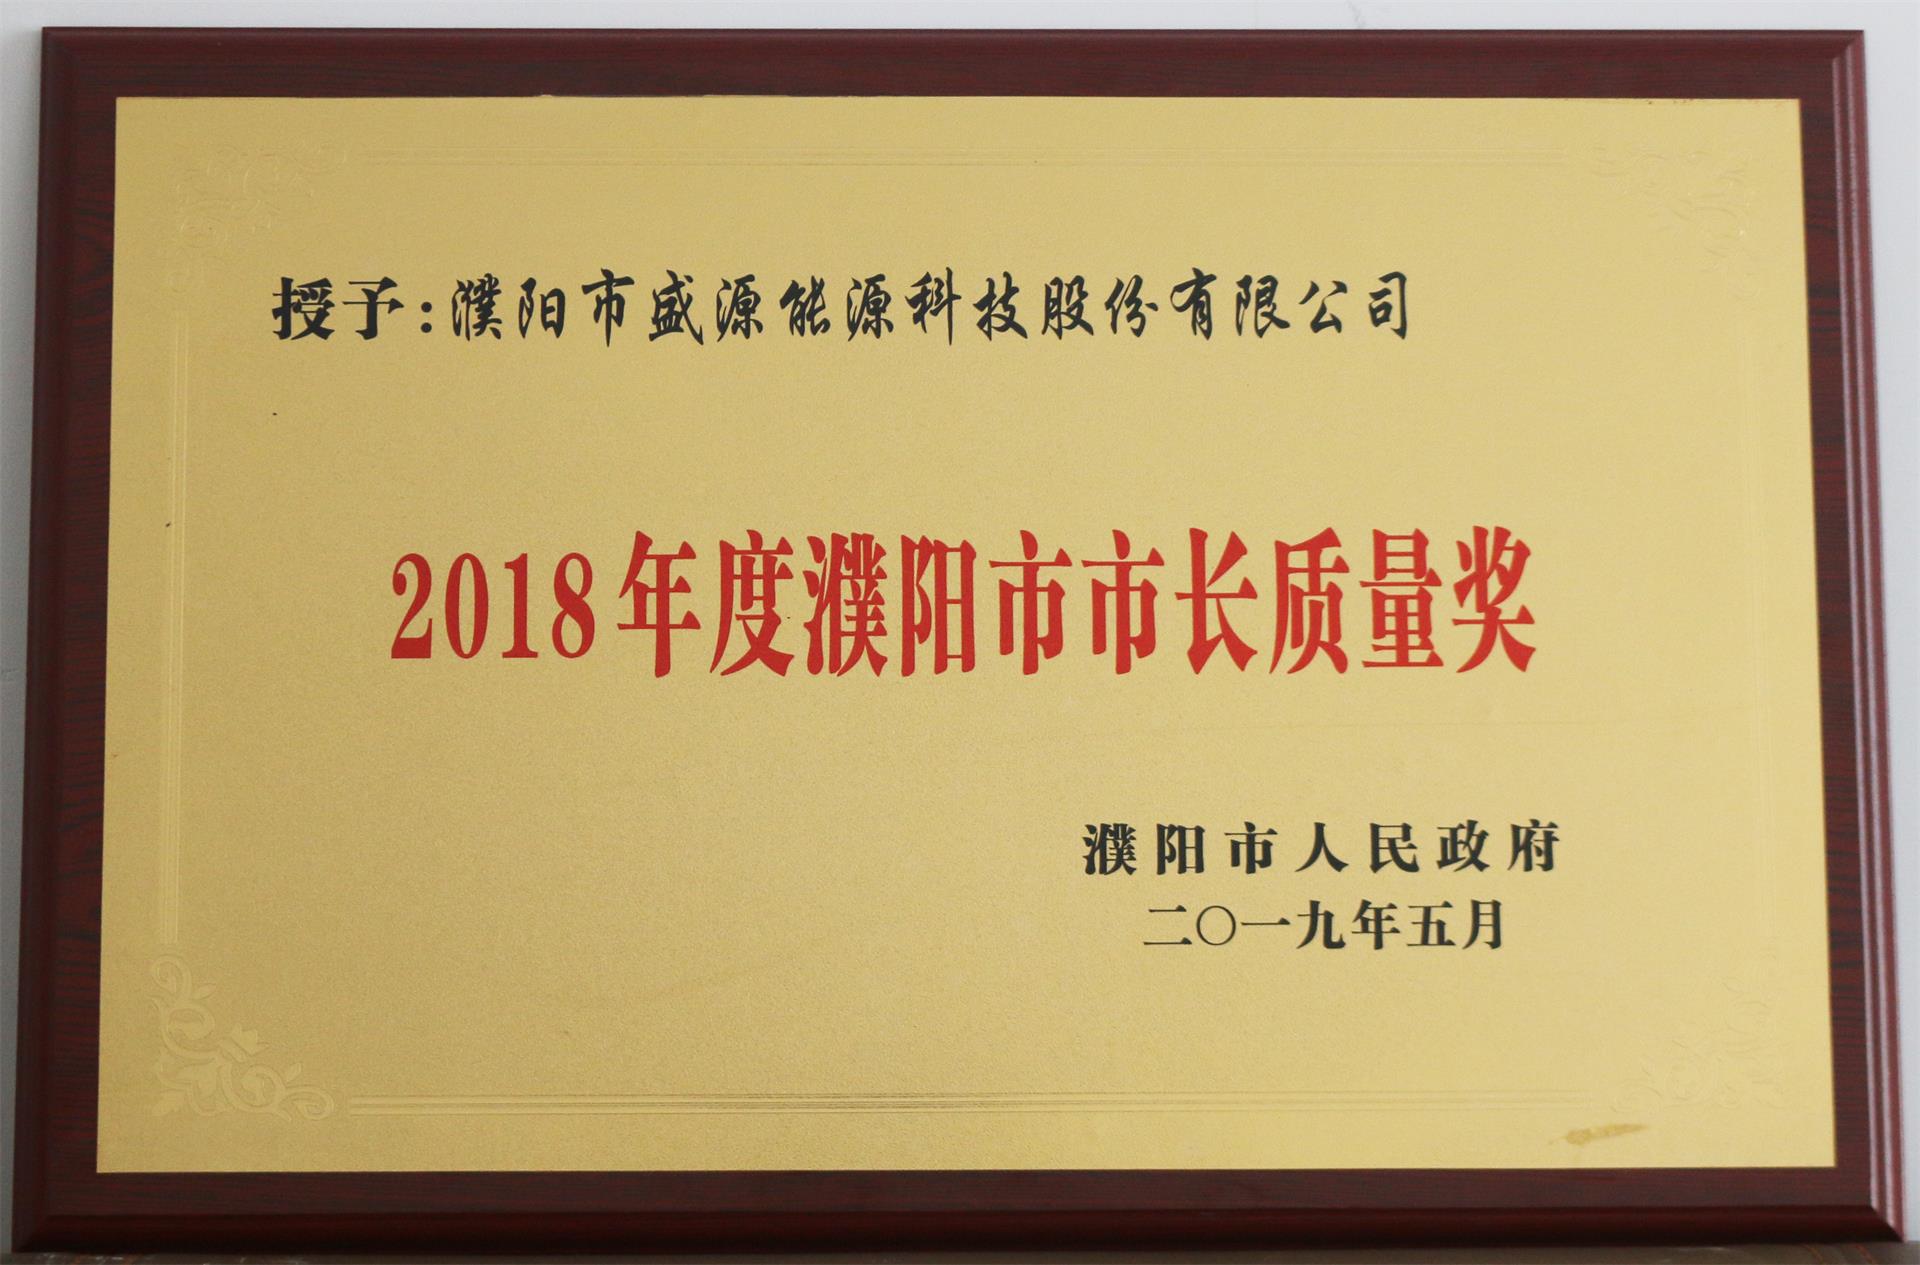 13.2019年5月，盛源科技榮獲“2018年度濮陽市市長質量獎”榮譽稱號.JPG